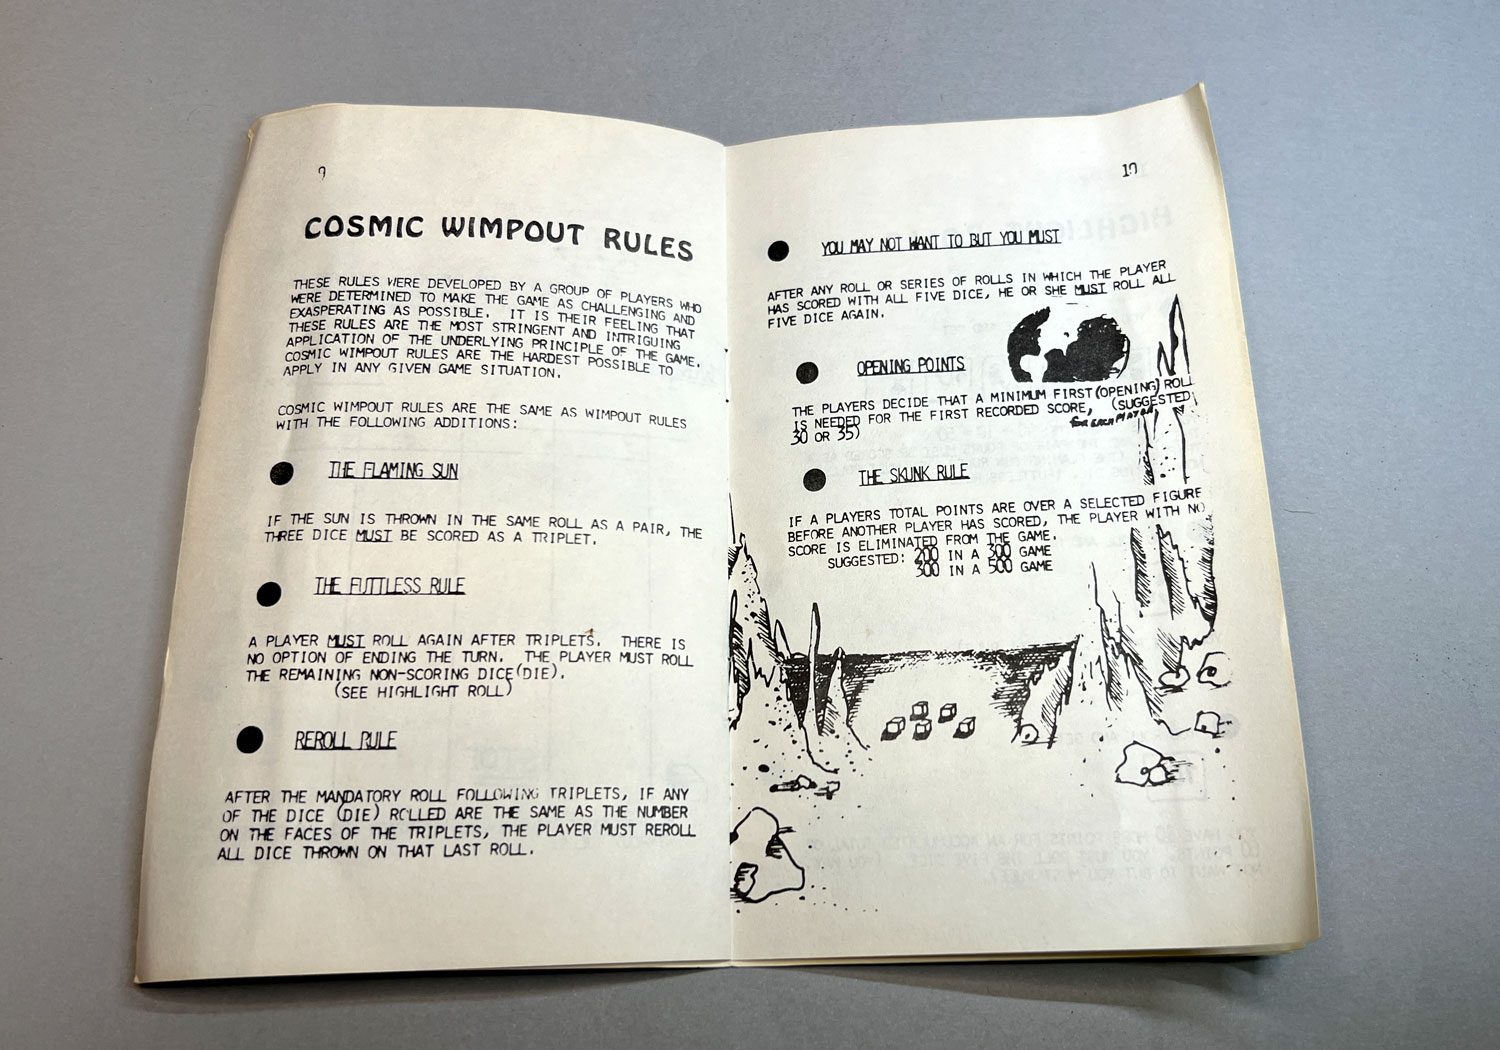 The Xeroxed rule book